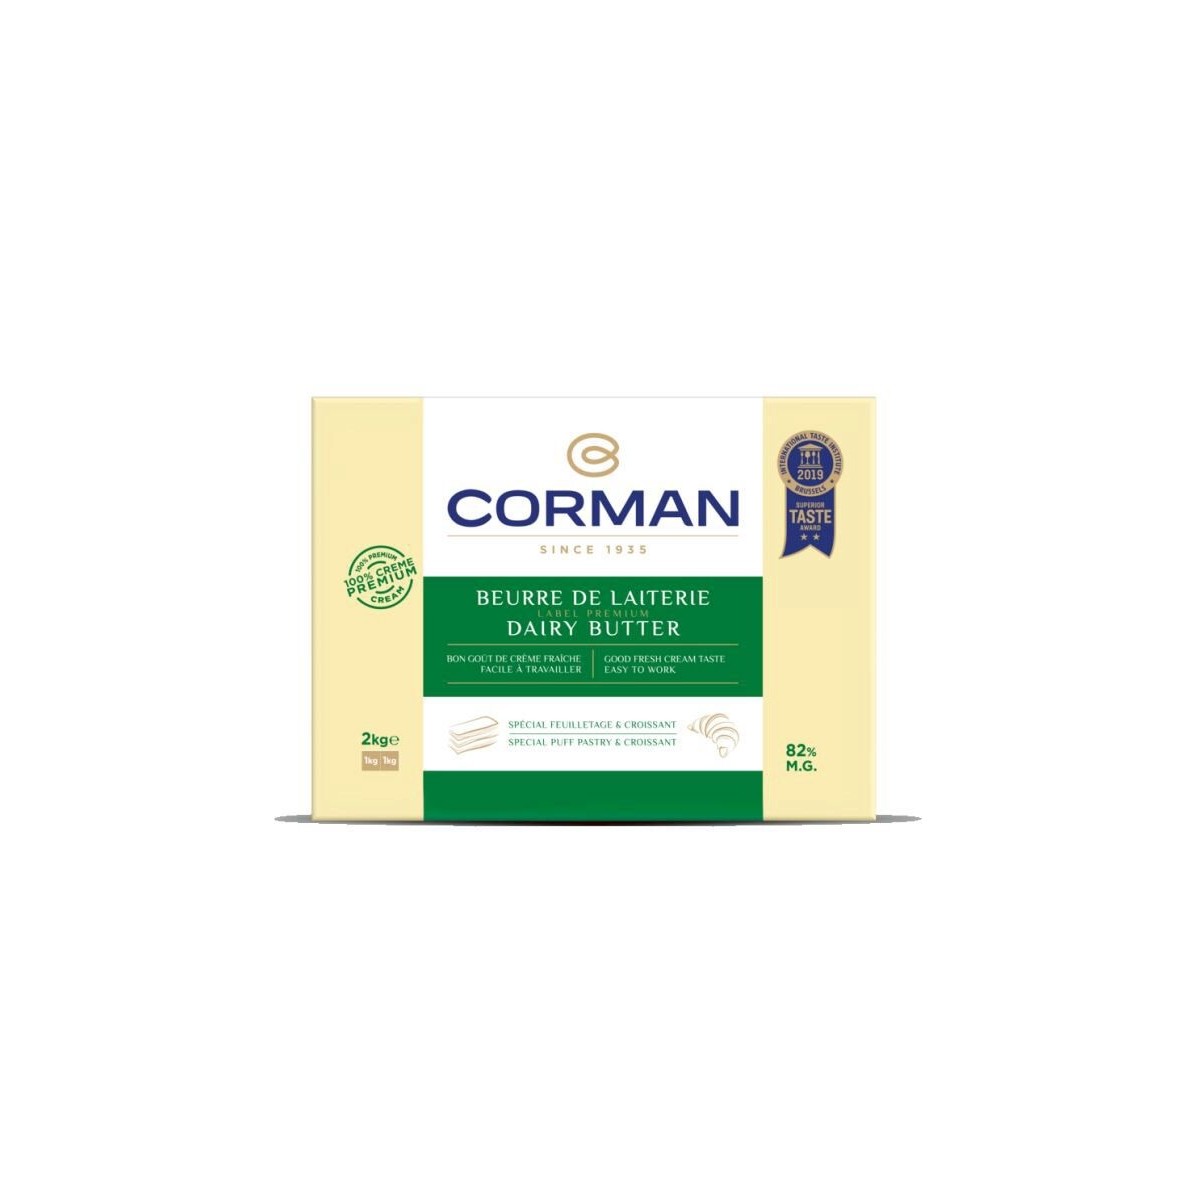 CORMAN DAIRY BUTTER PUFF PASTRY & CROISSANT 5 X 2 KG 0026925 - 26850301  KG